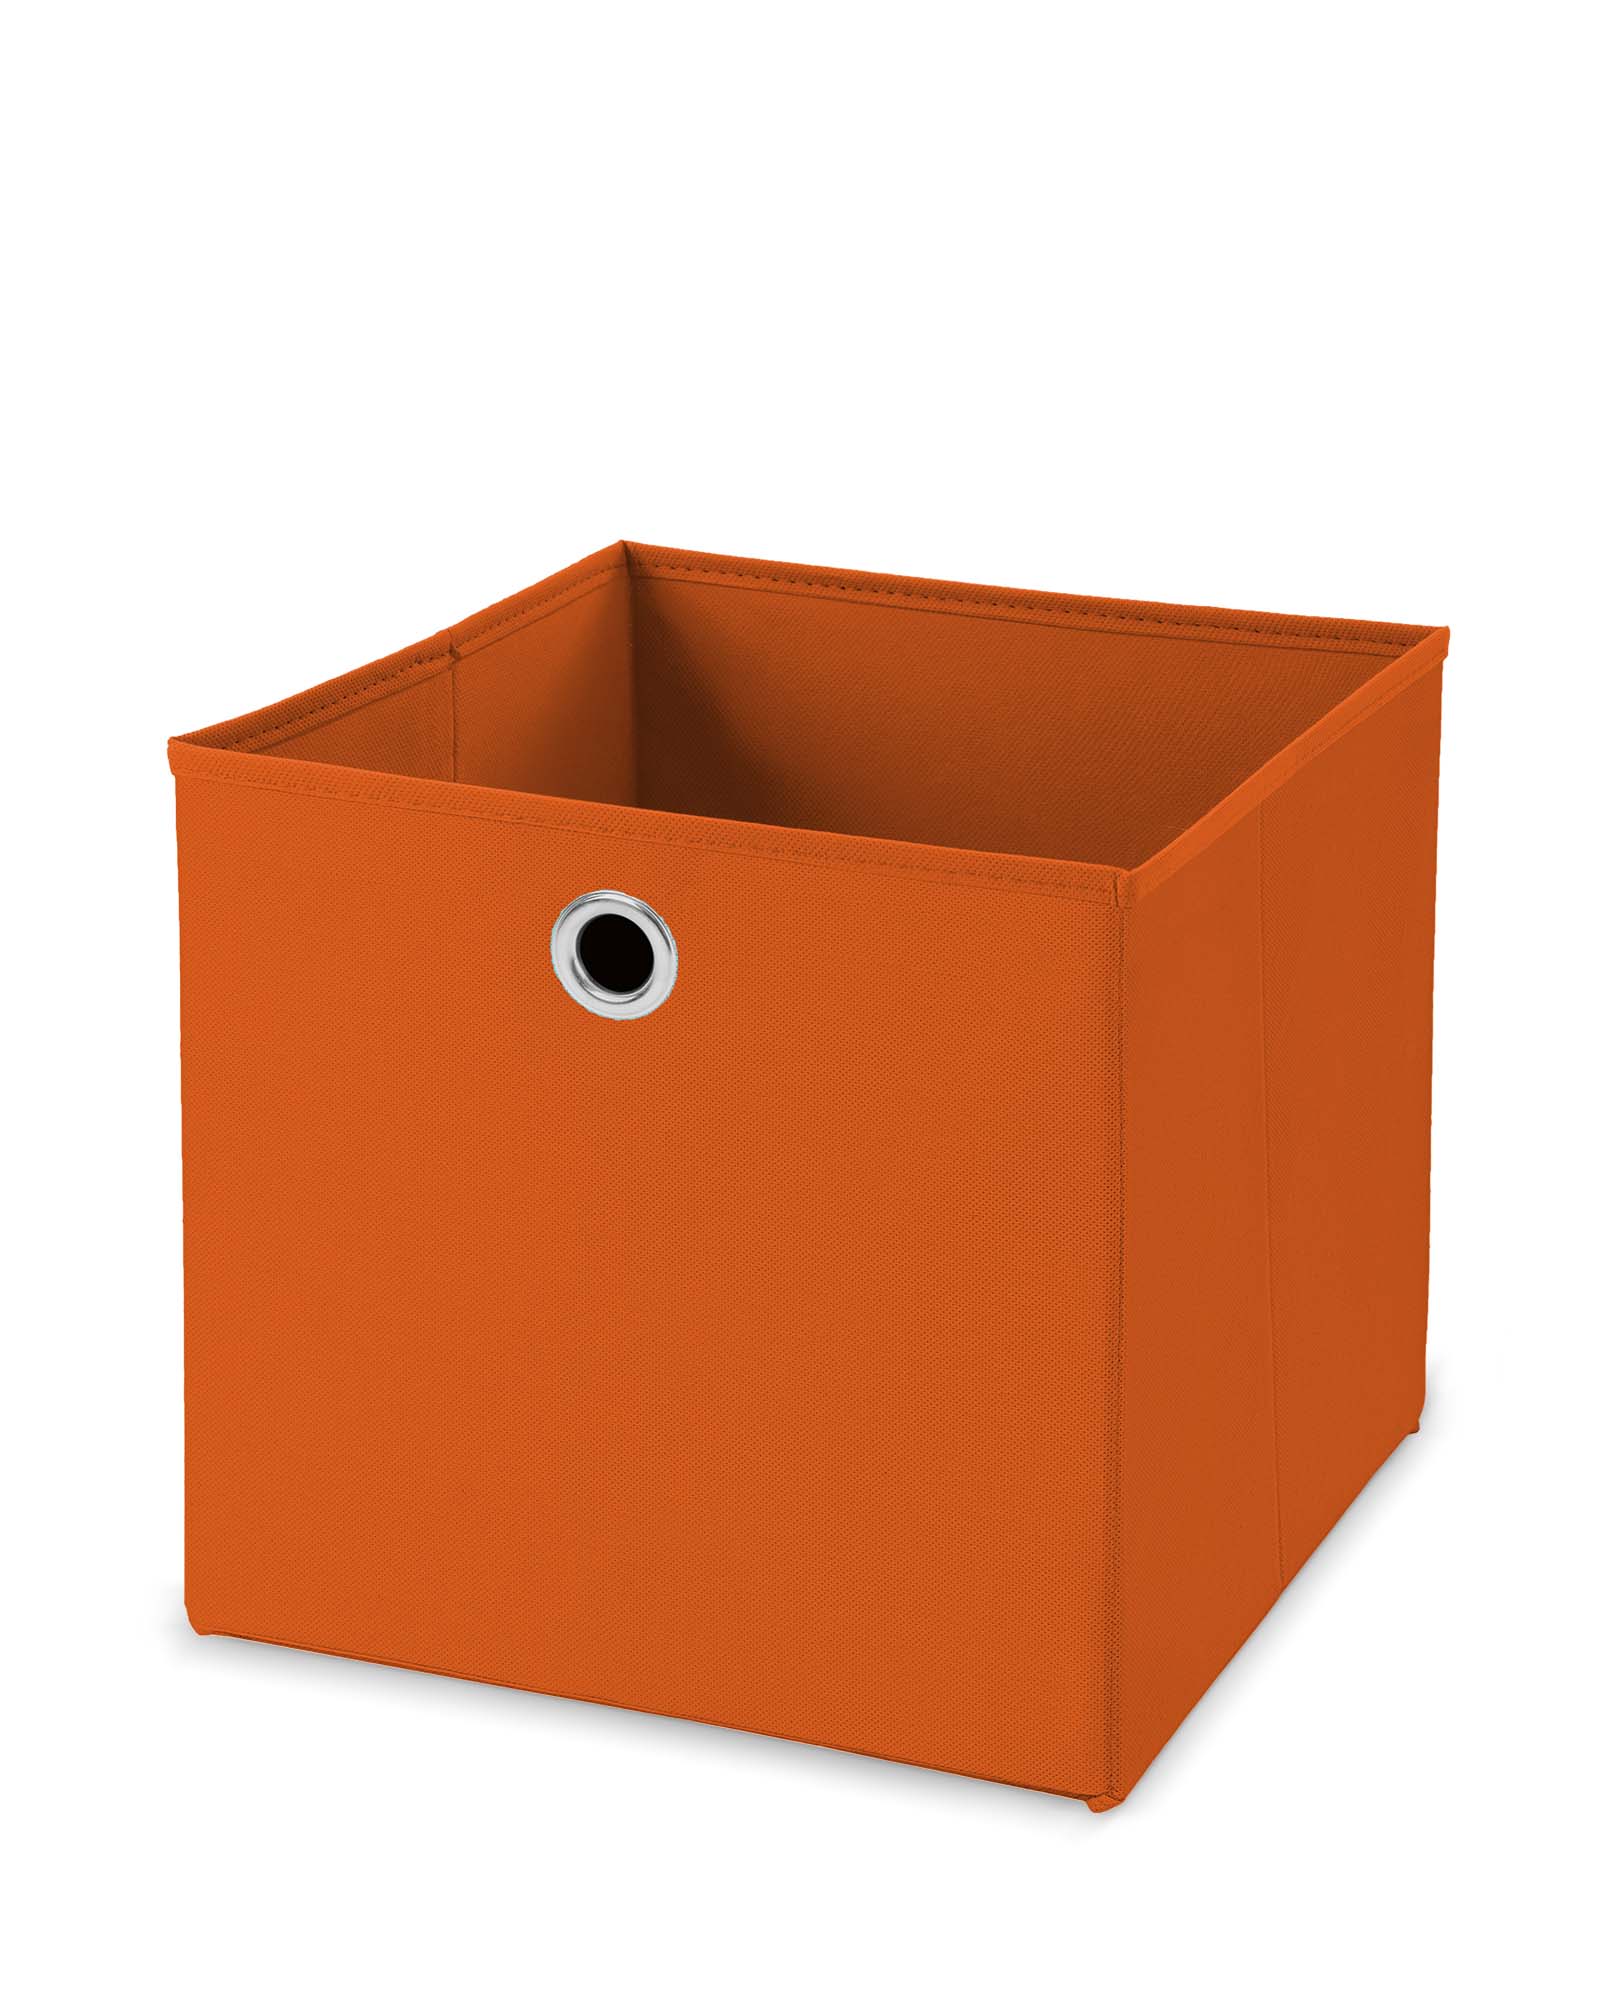 CM3 4 Stück Rot Faltbox 28 x 28 x 28 cm Aufbewahrungsbox faltbar mit Deckel